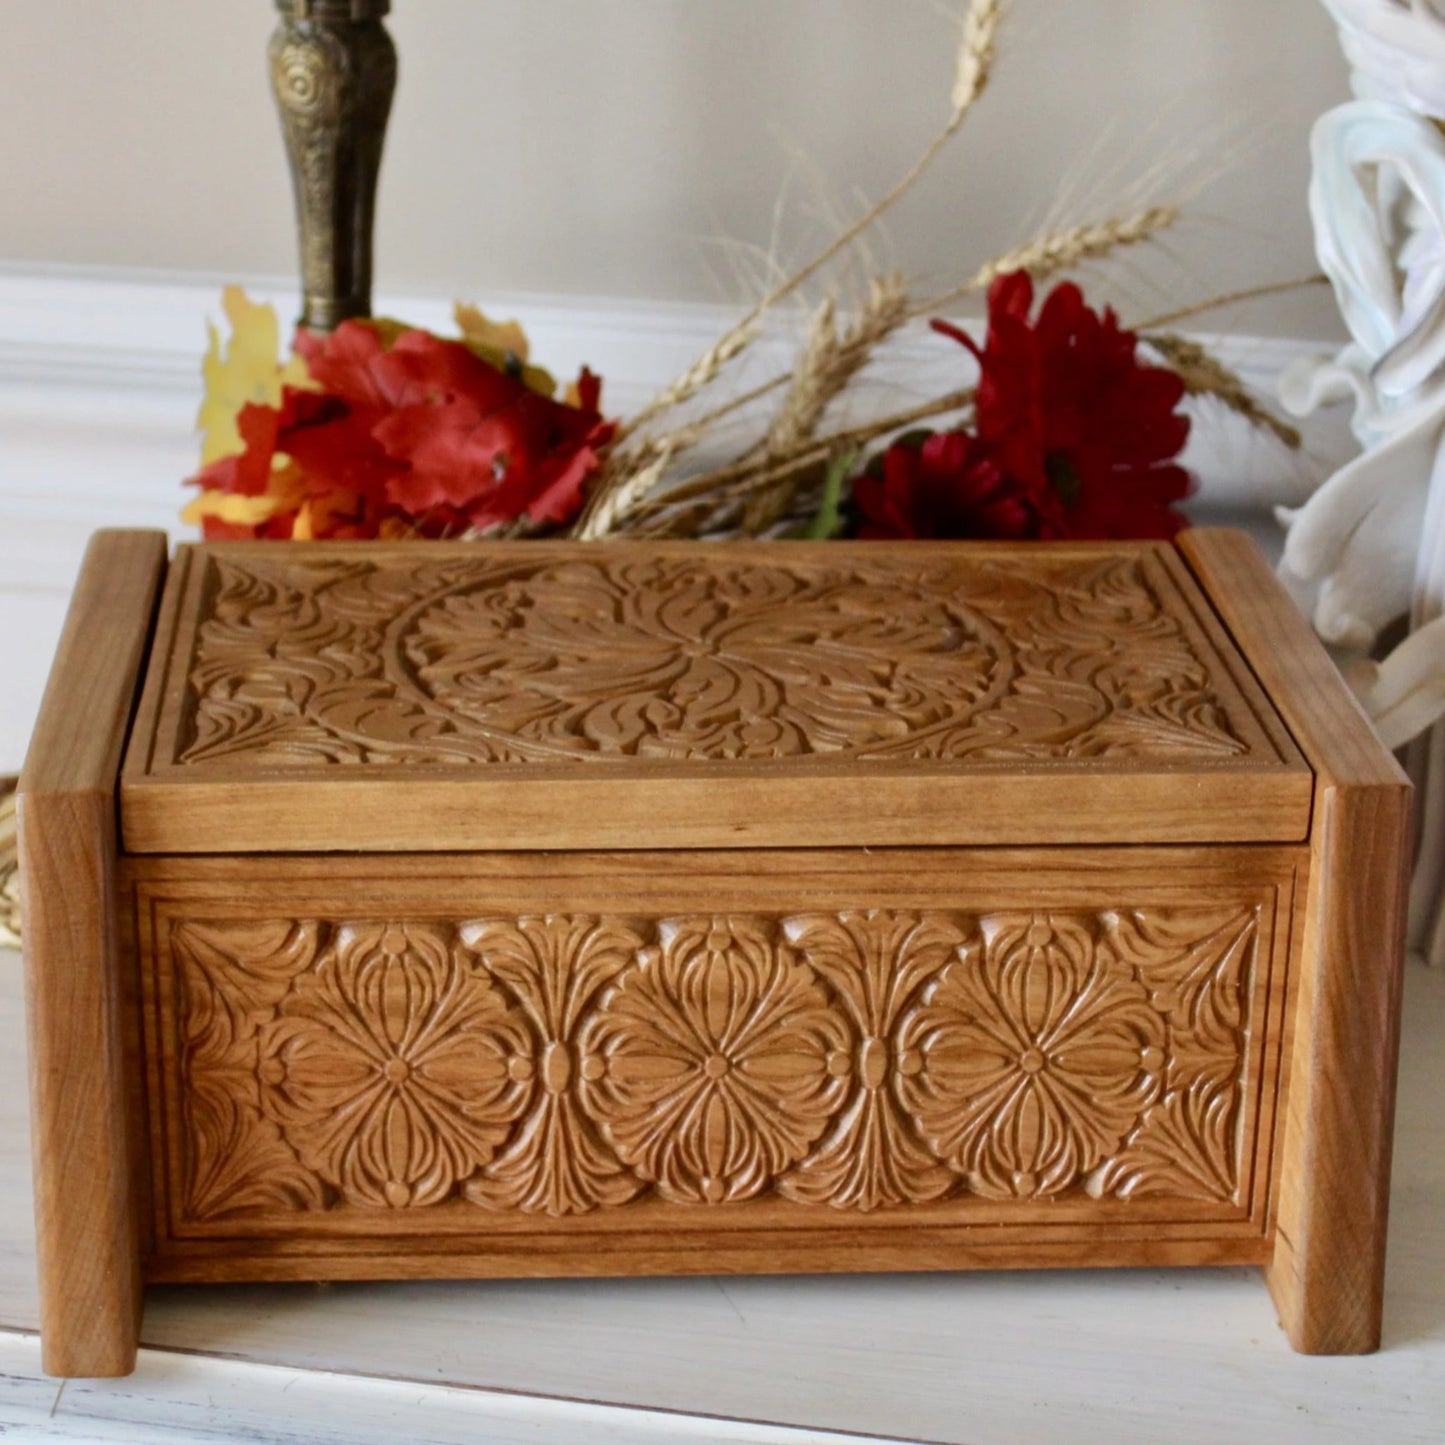 ornate cremation urn box